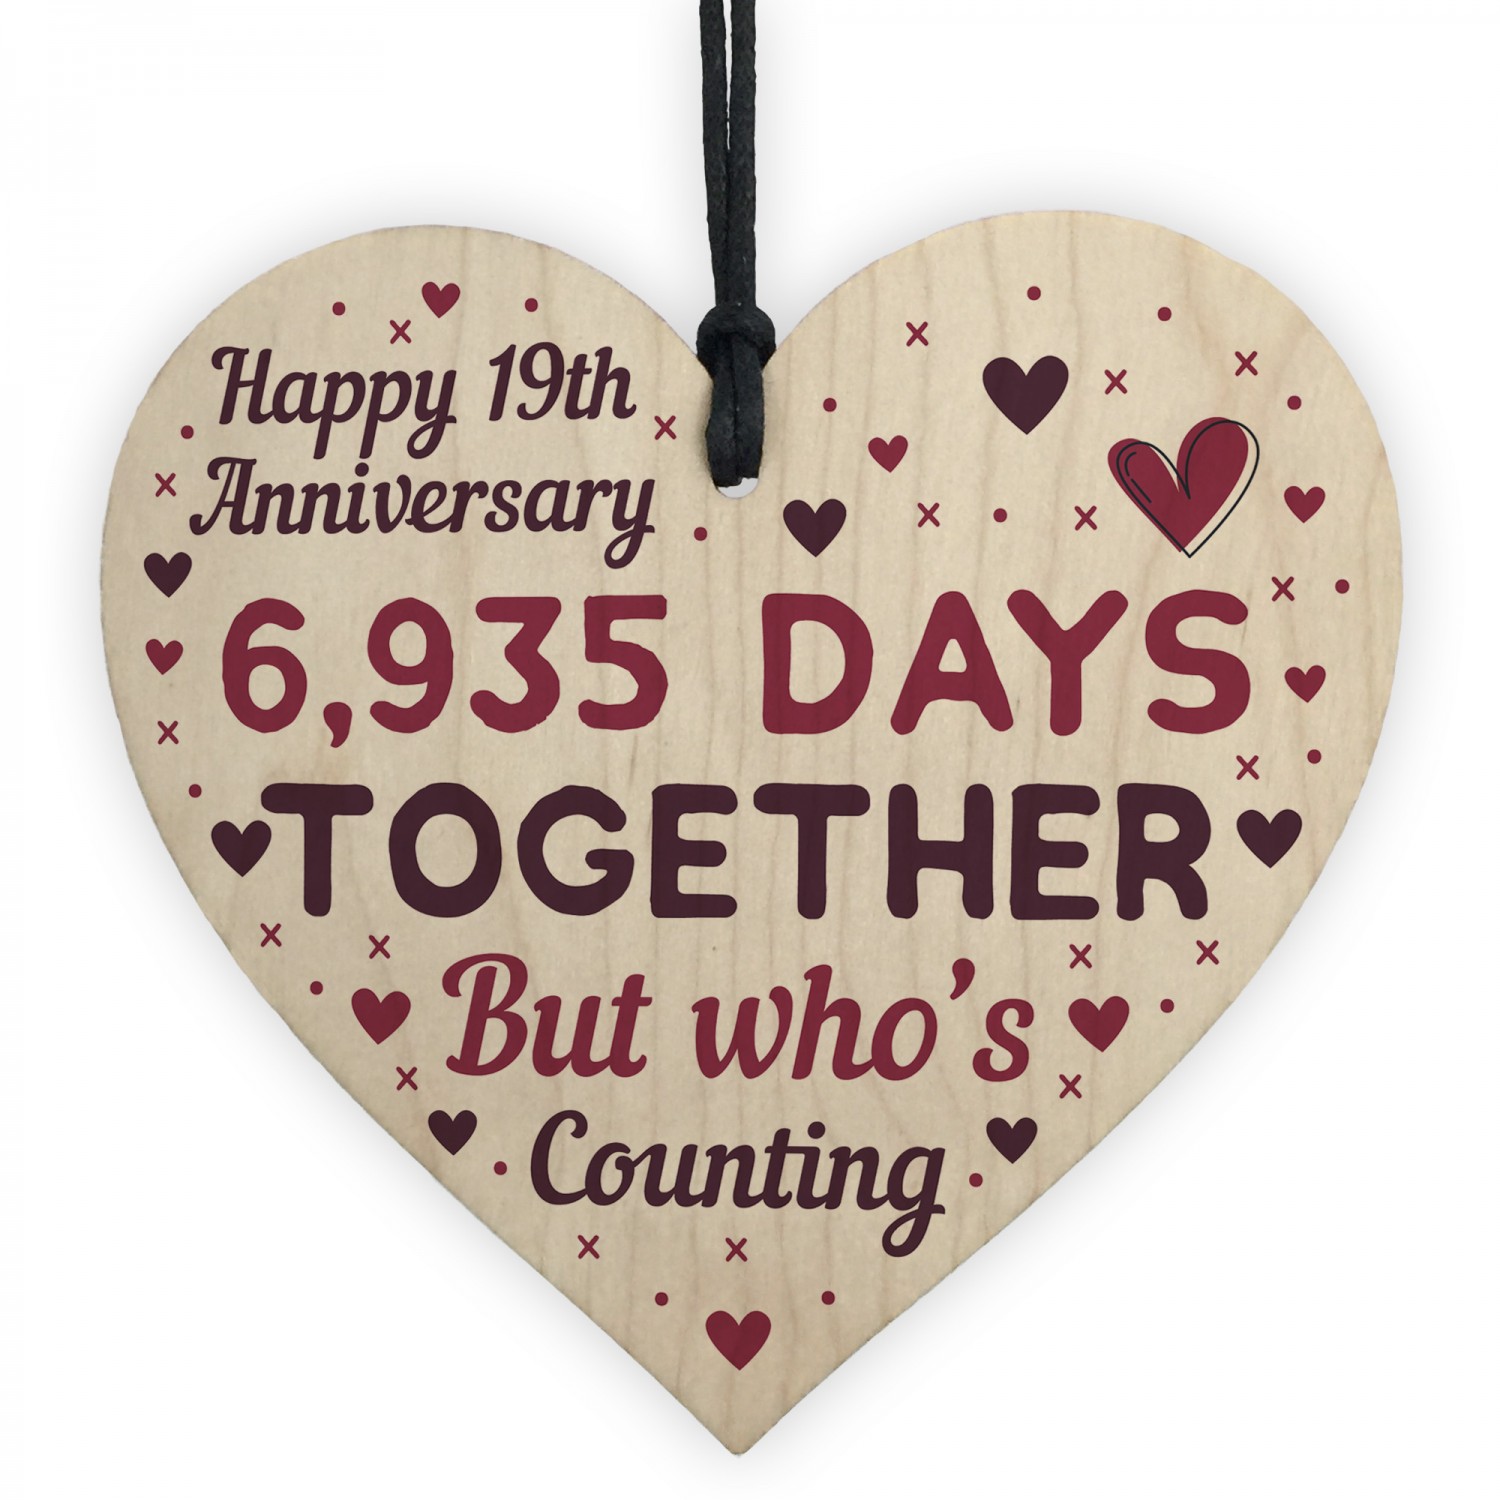 19th wedding anniversary wishes to husband